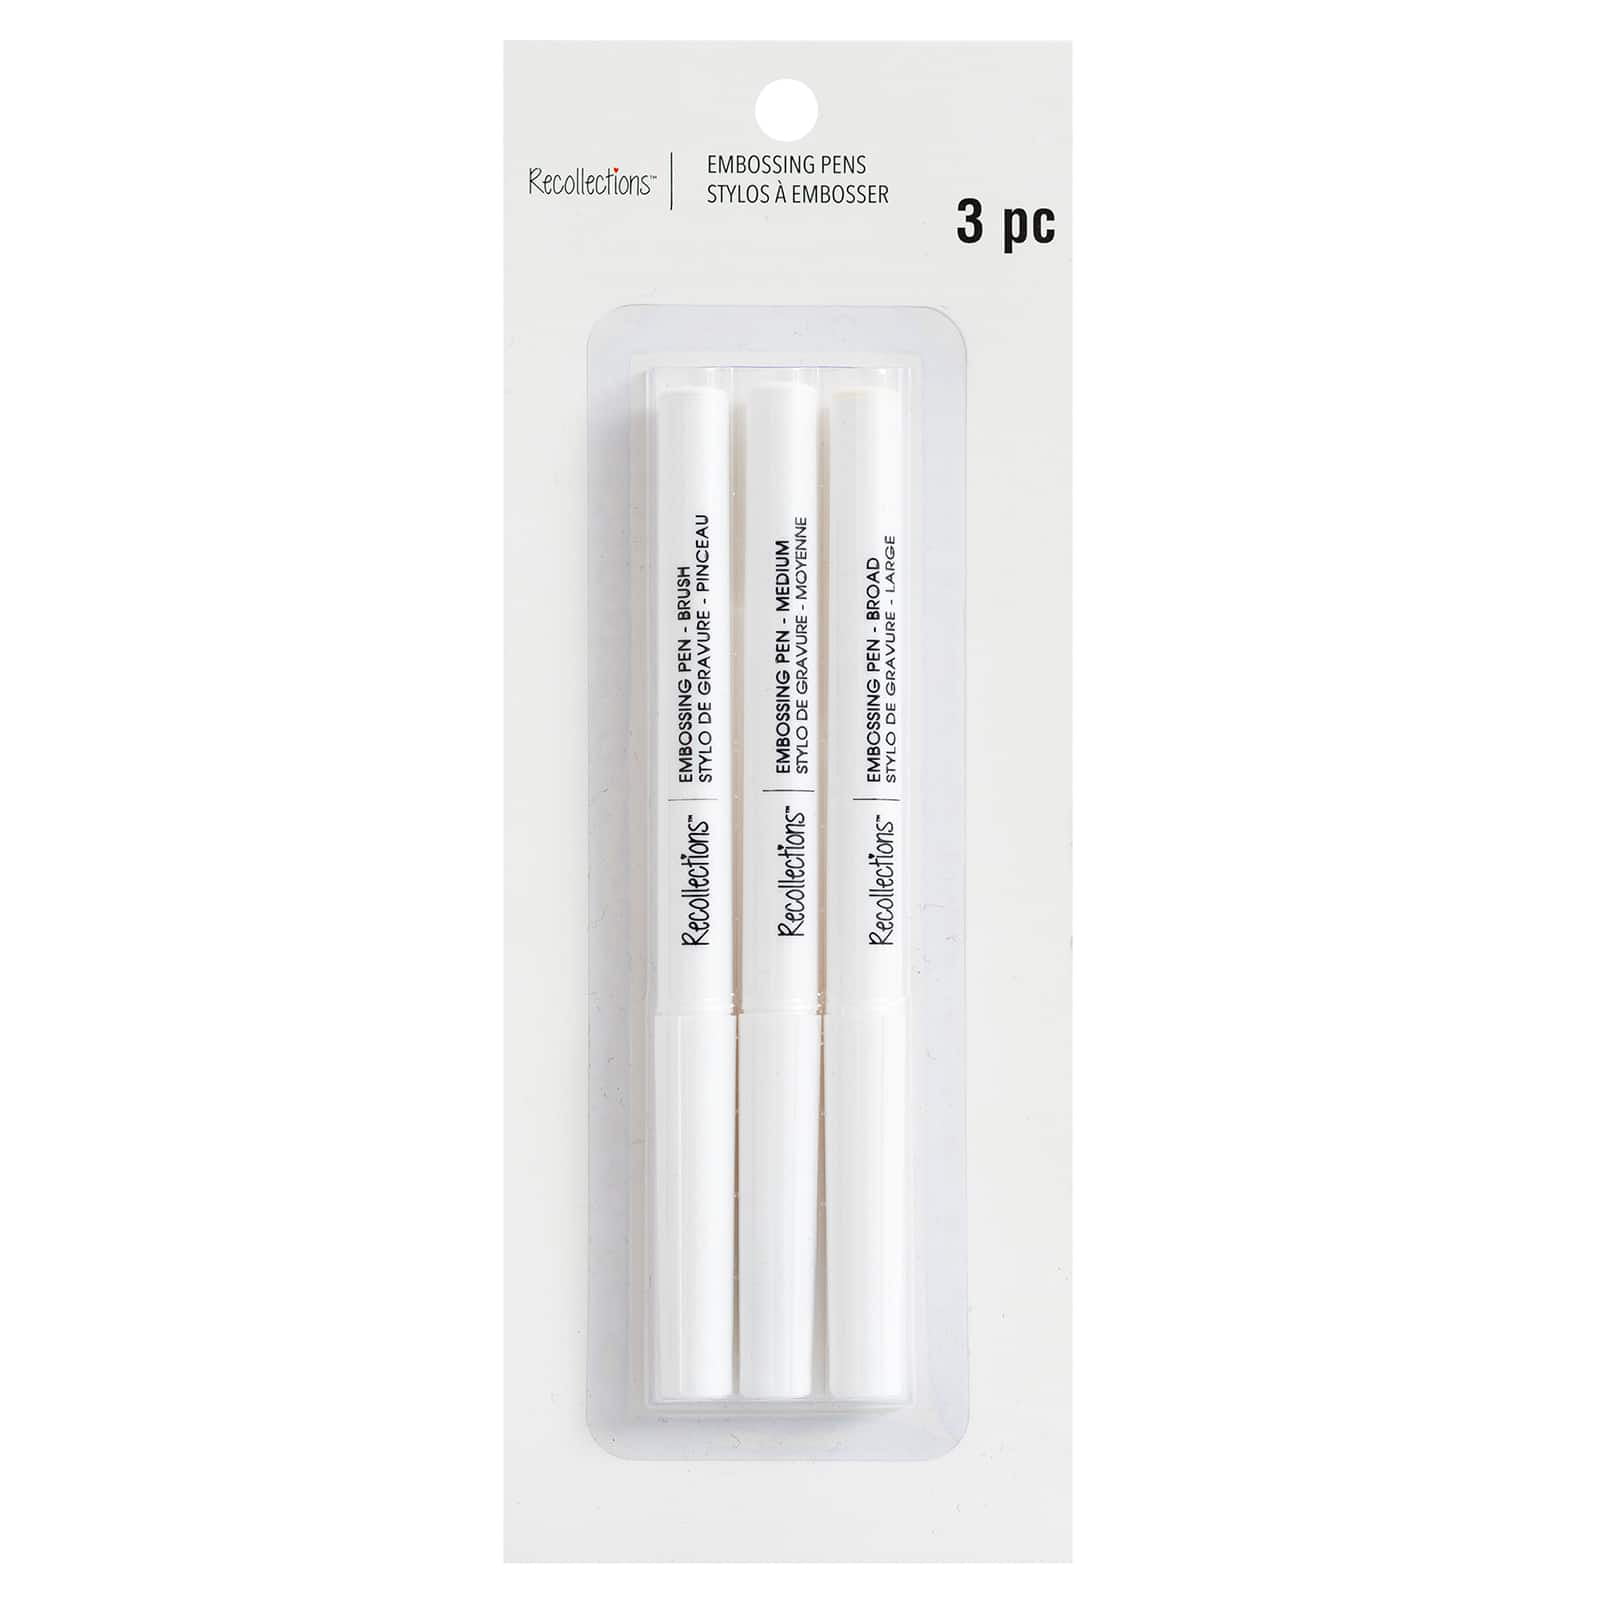 ik heb dorst essay Algemeen MICHAELS Bulk 12 Packs: 3 ct. (36 total) Embossing Pens by Recollections™ -  Walmart.com